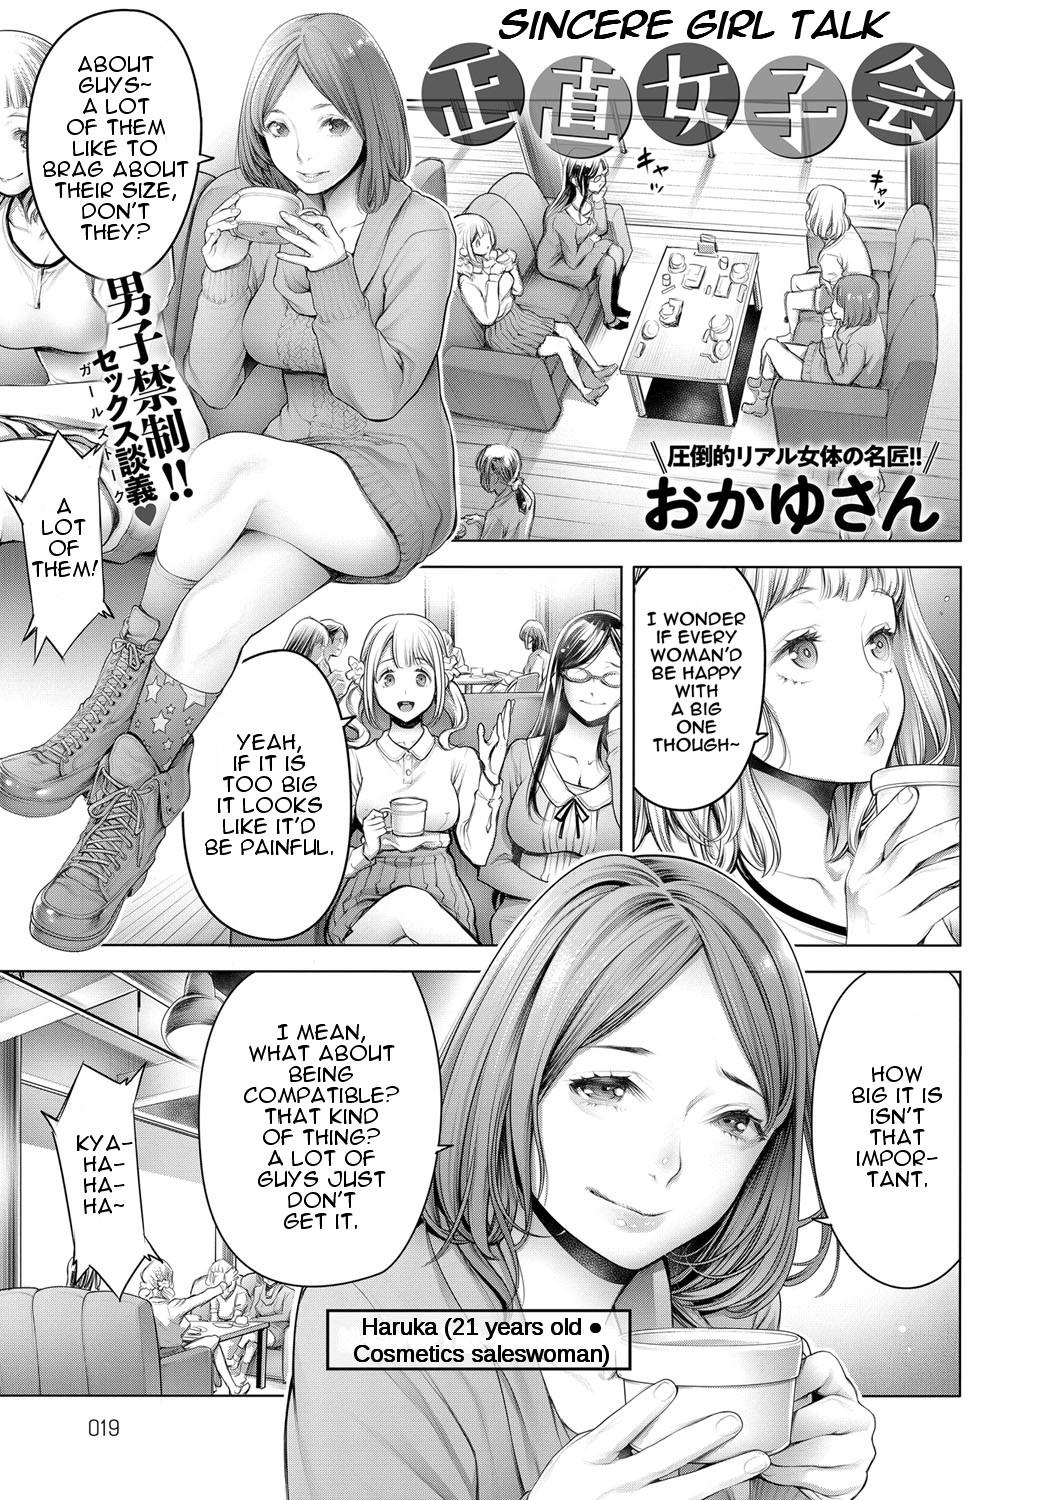 Hentai Manga Comic-Sincere Girl Talk-Read-1